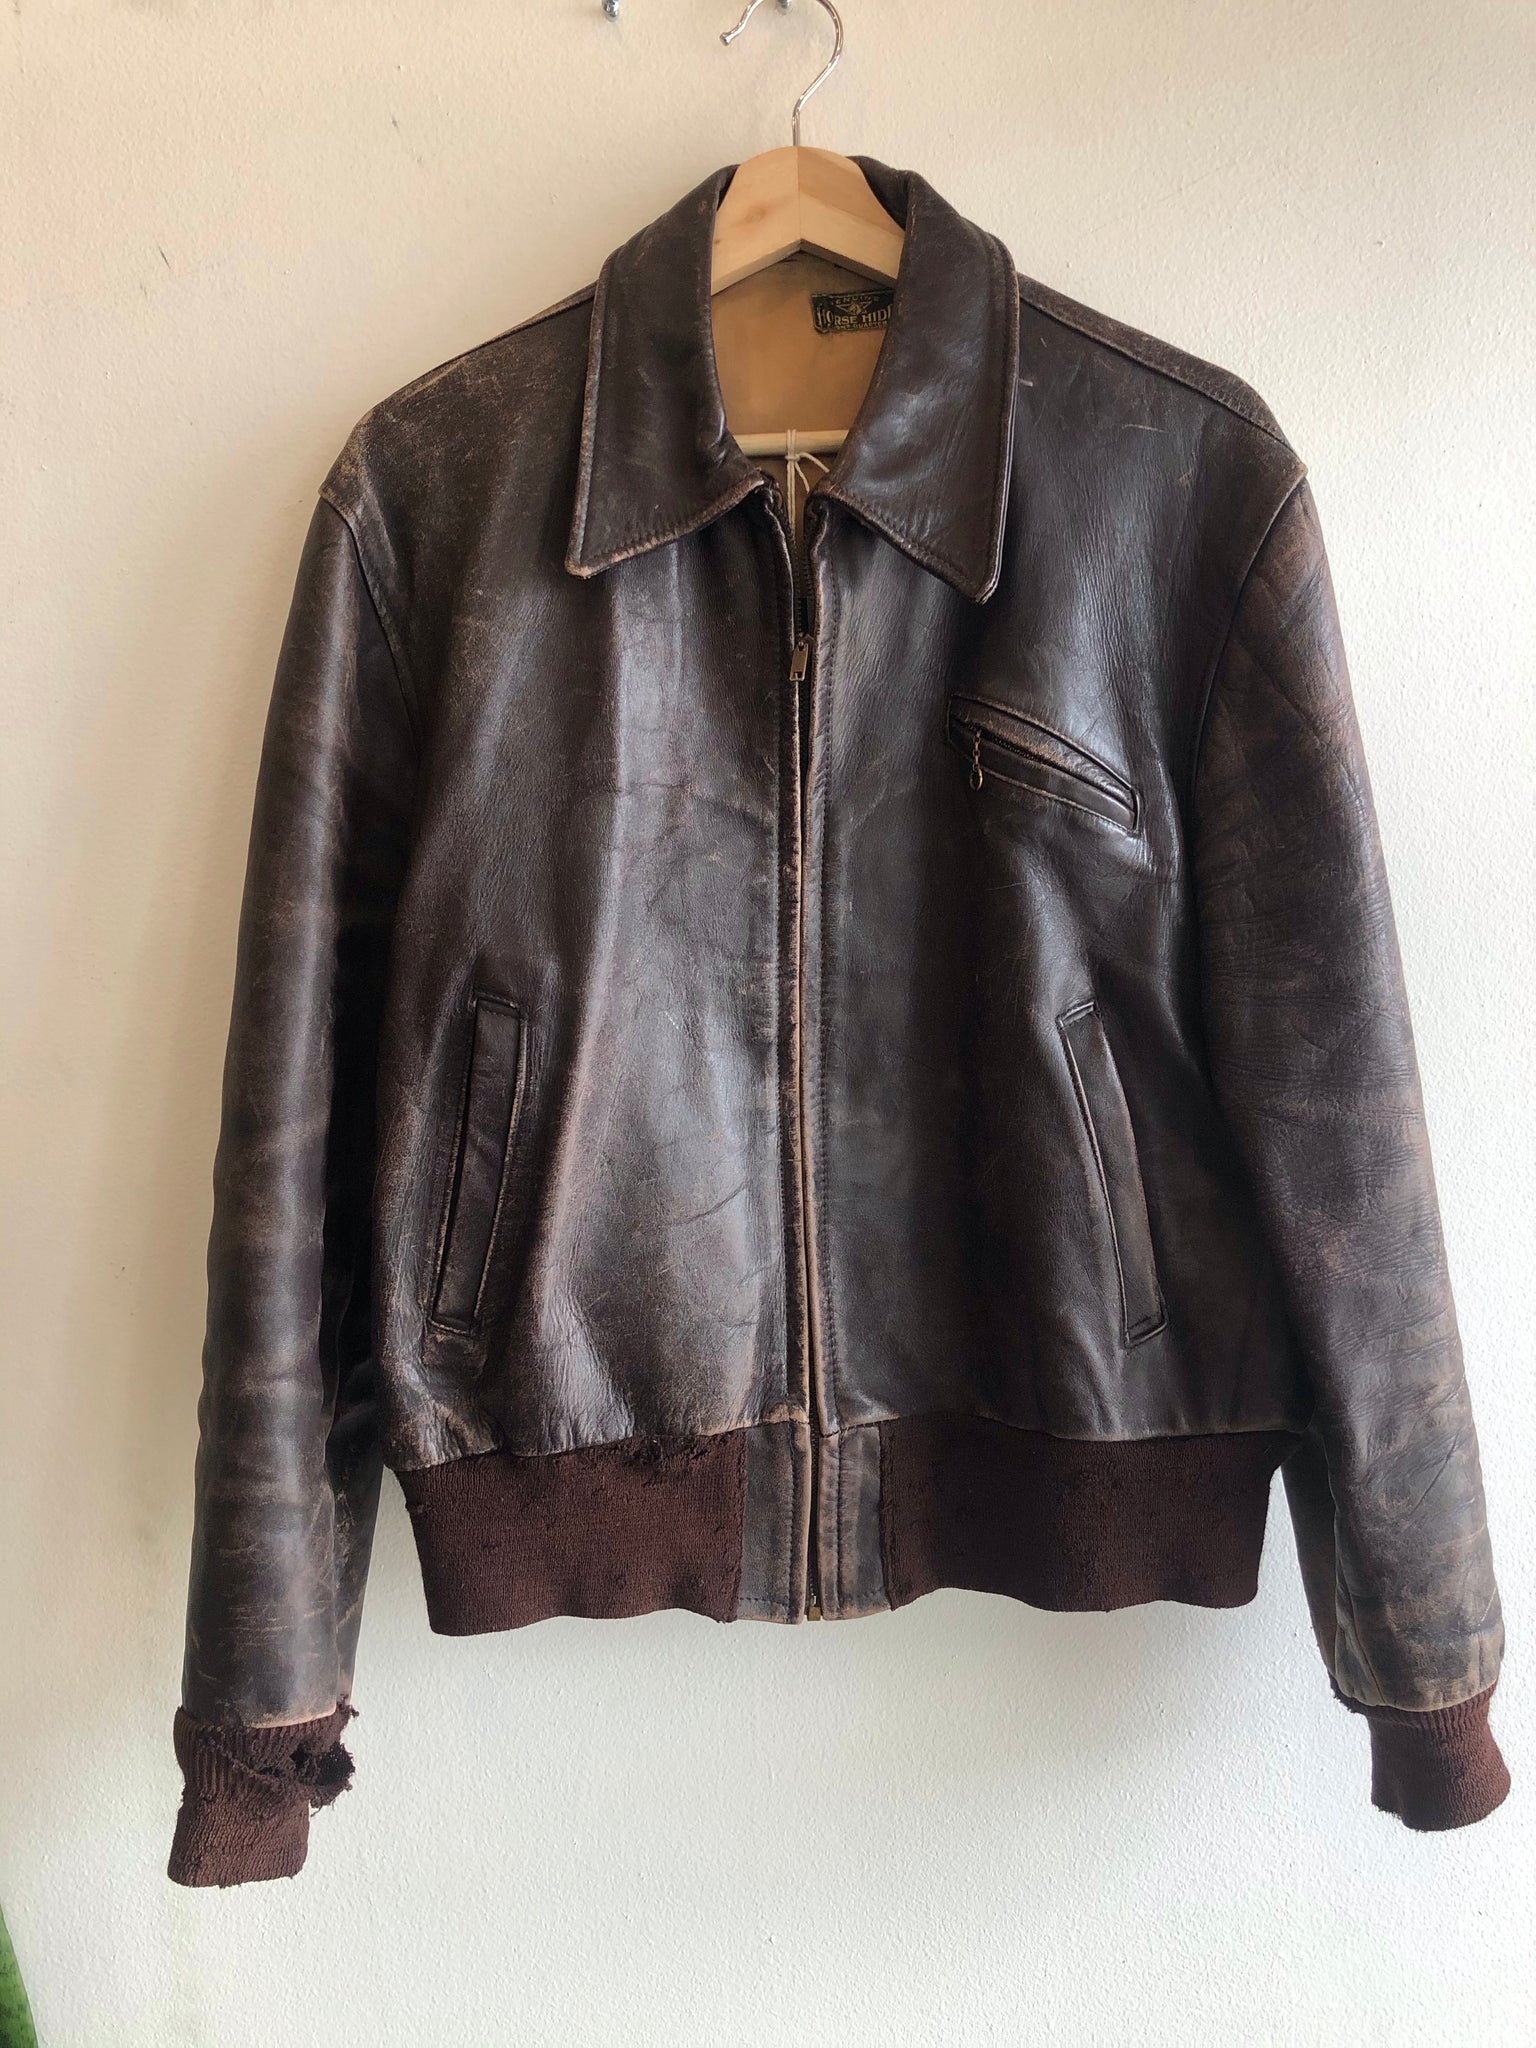 Vintage 1940s/1950s Unbranded Horsehide Leather Bomber Jacket